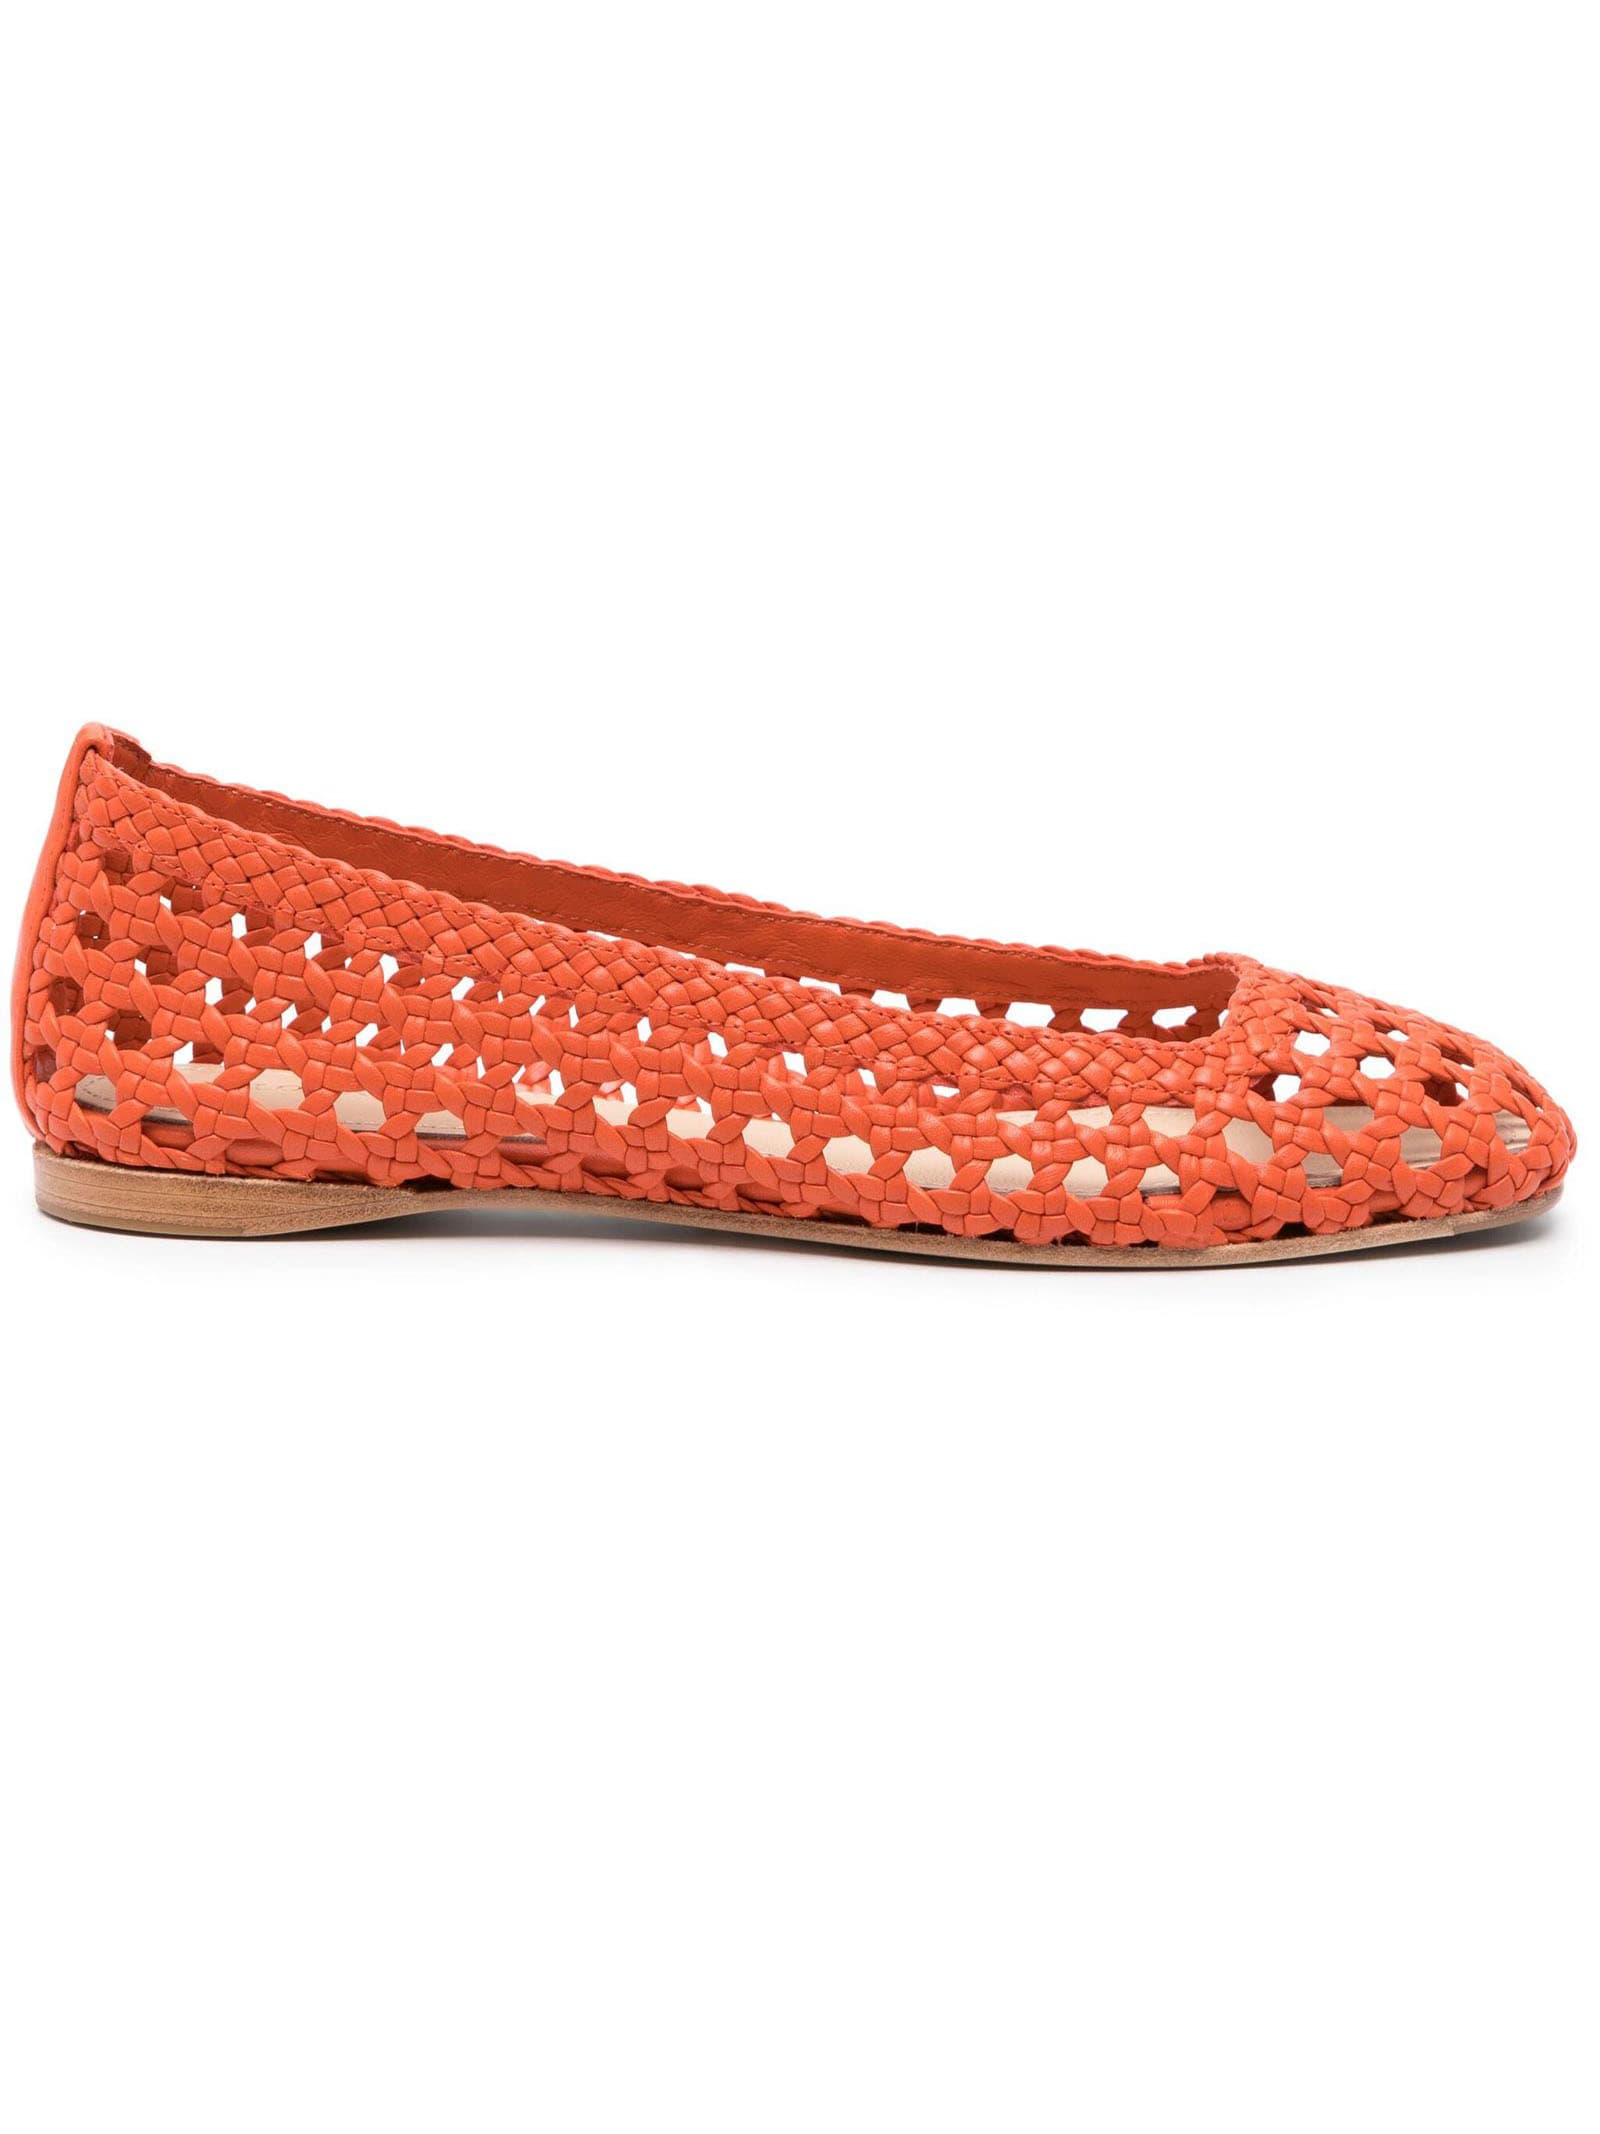 Paloma Barceló Orange Calf Leather Ballerina Shoes